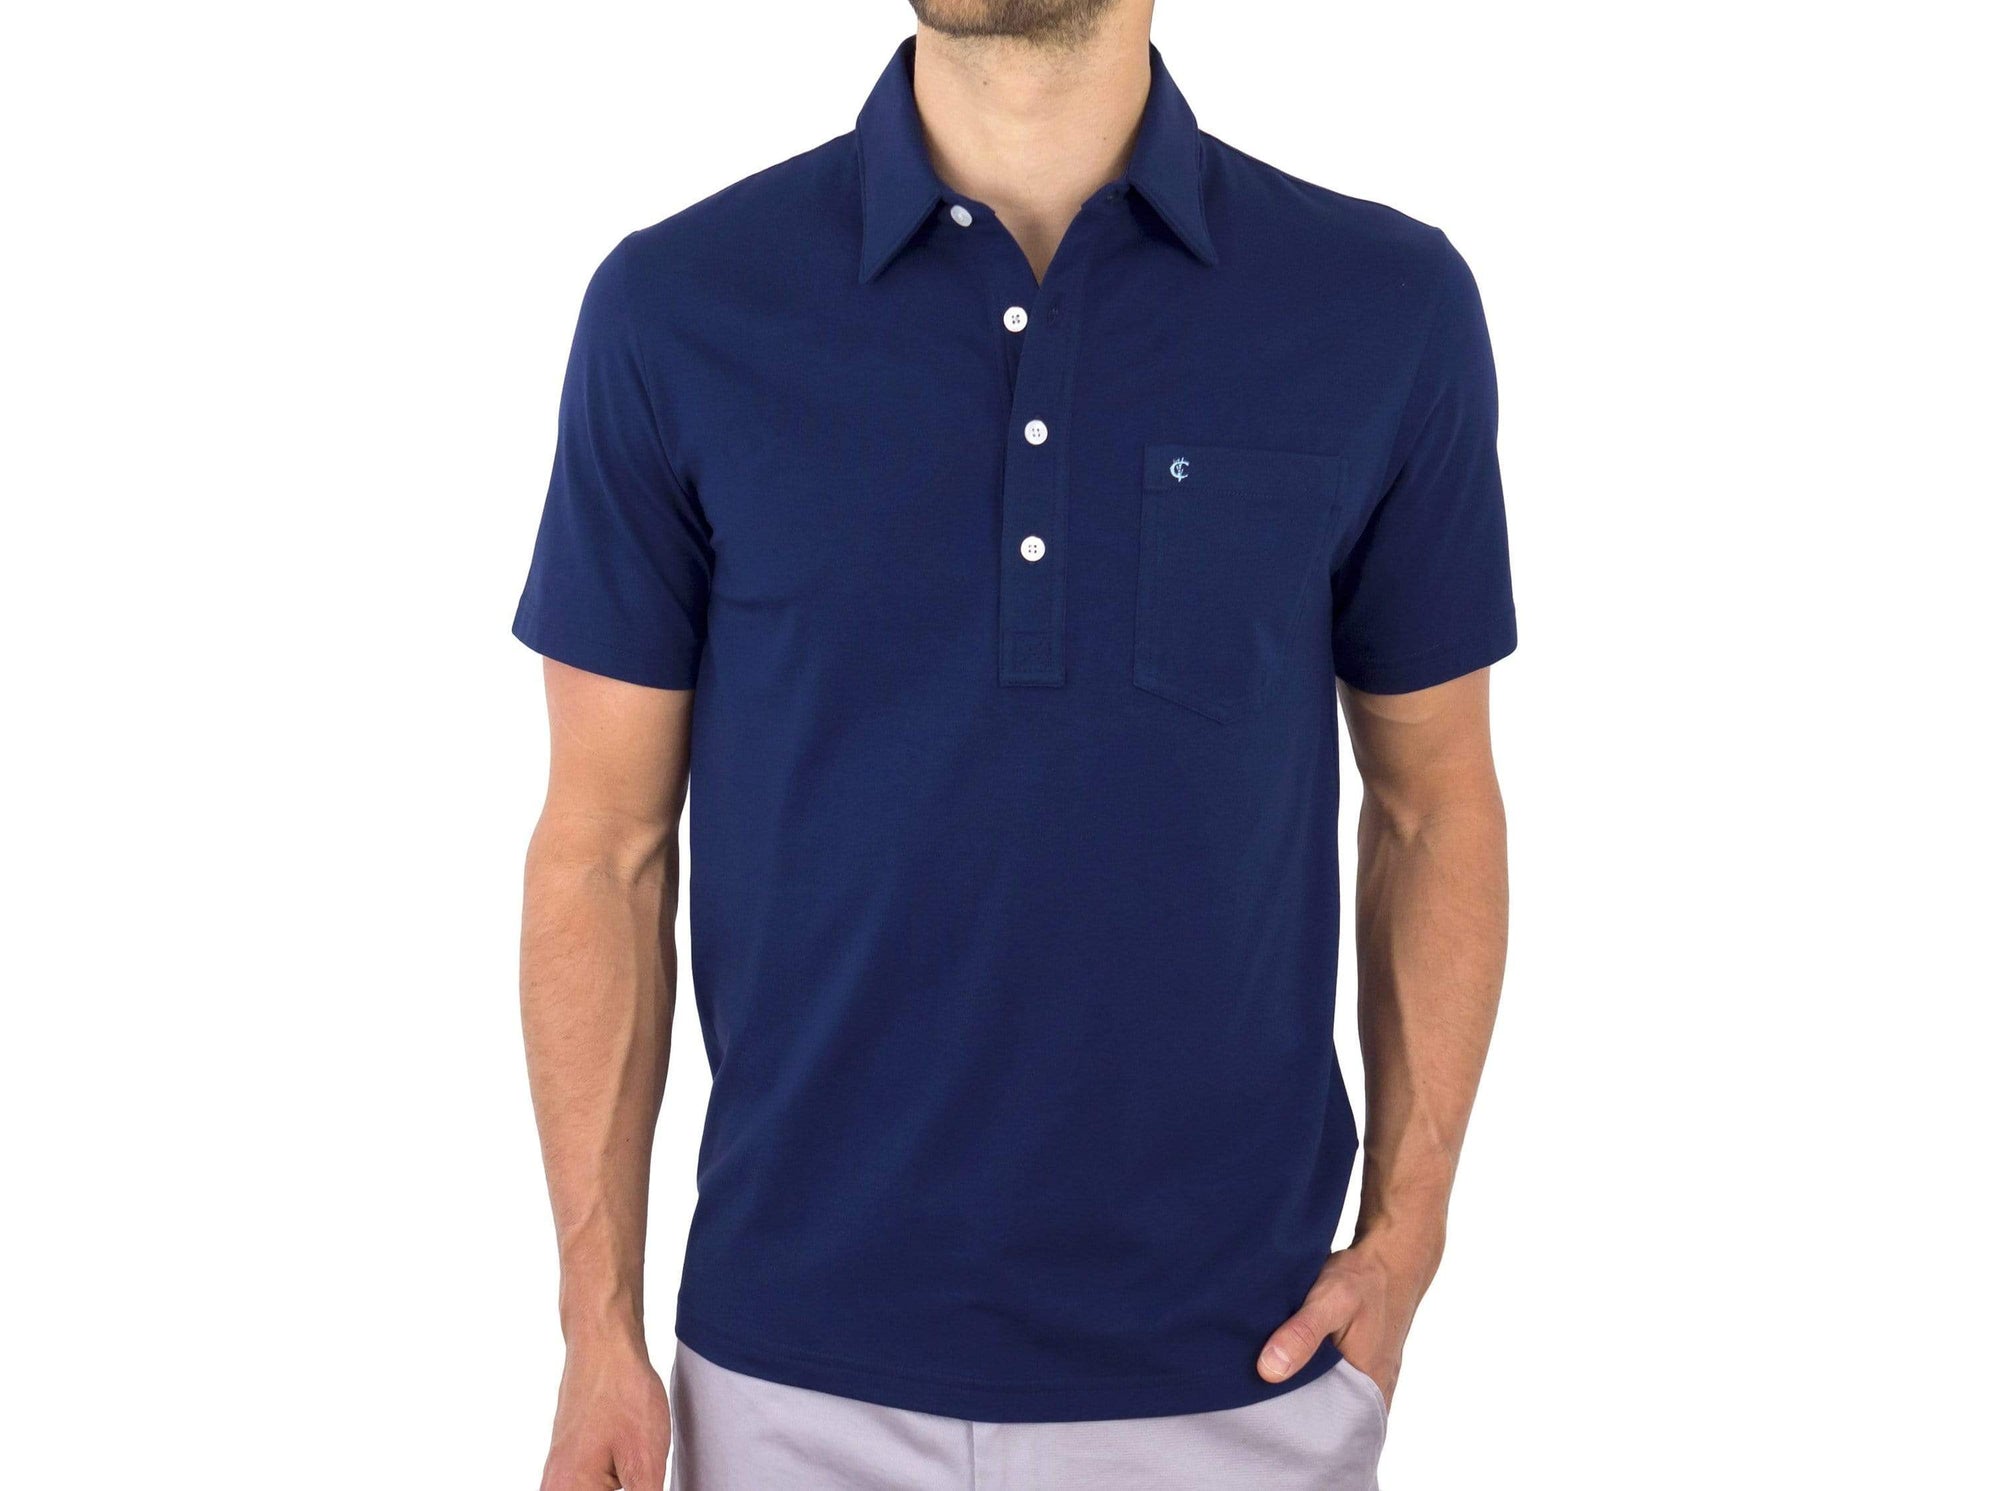 Top-Shelf Players Shirt - Navy Blue - Secondary